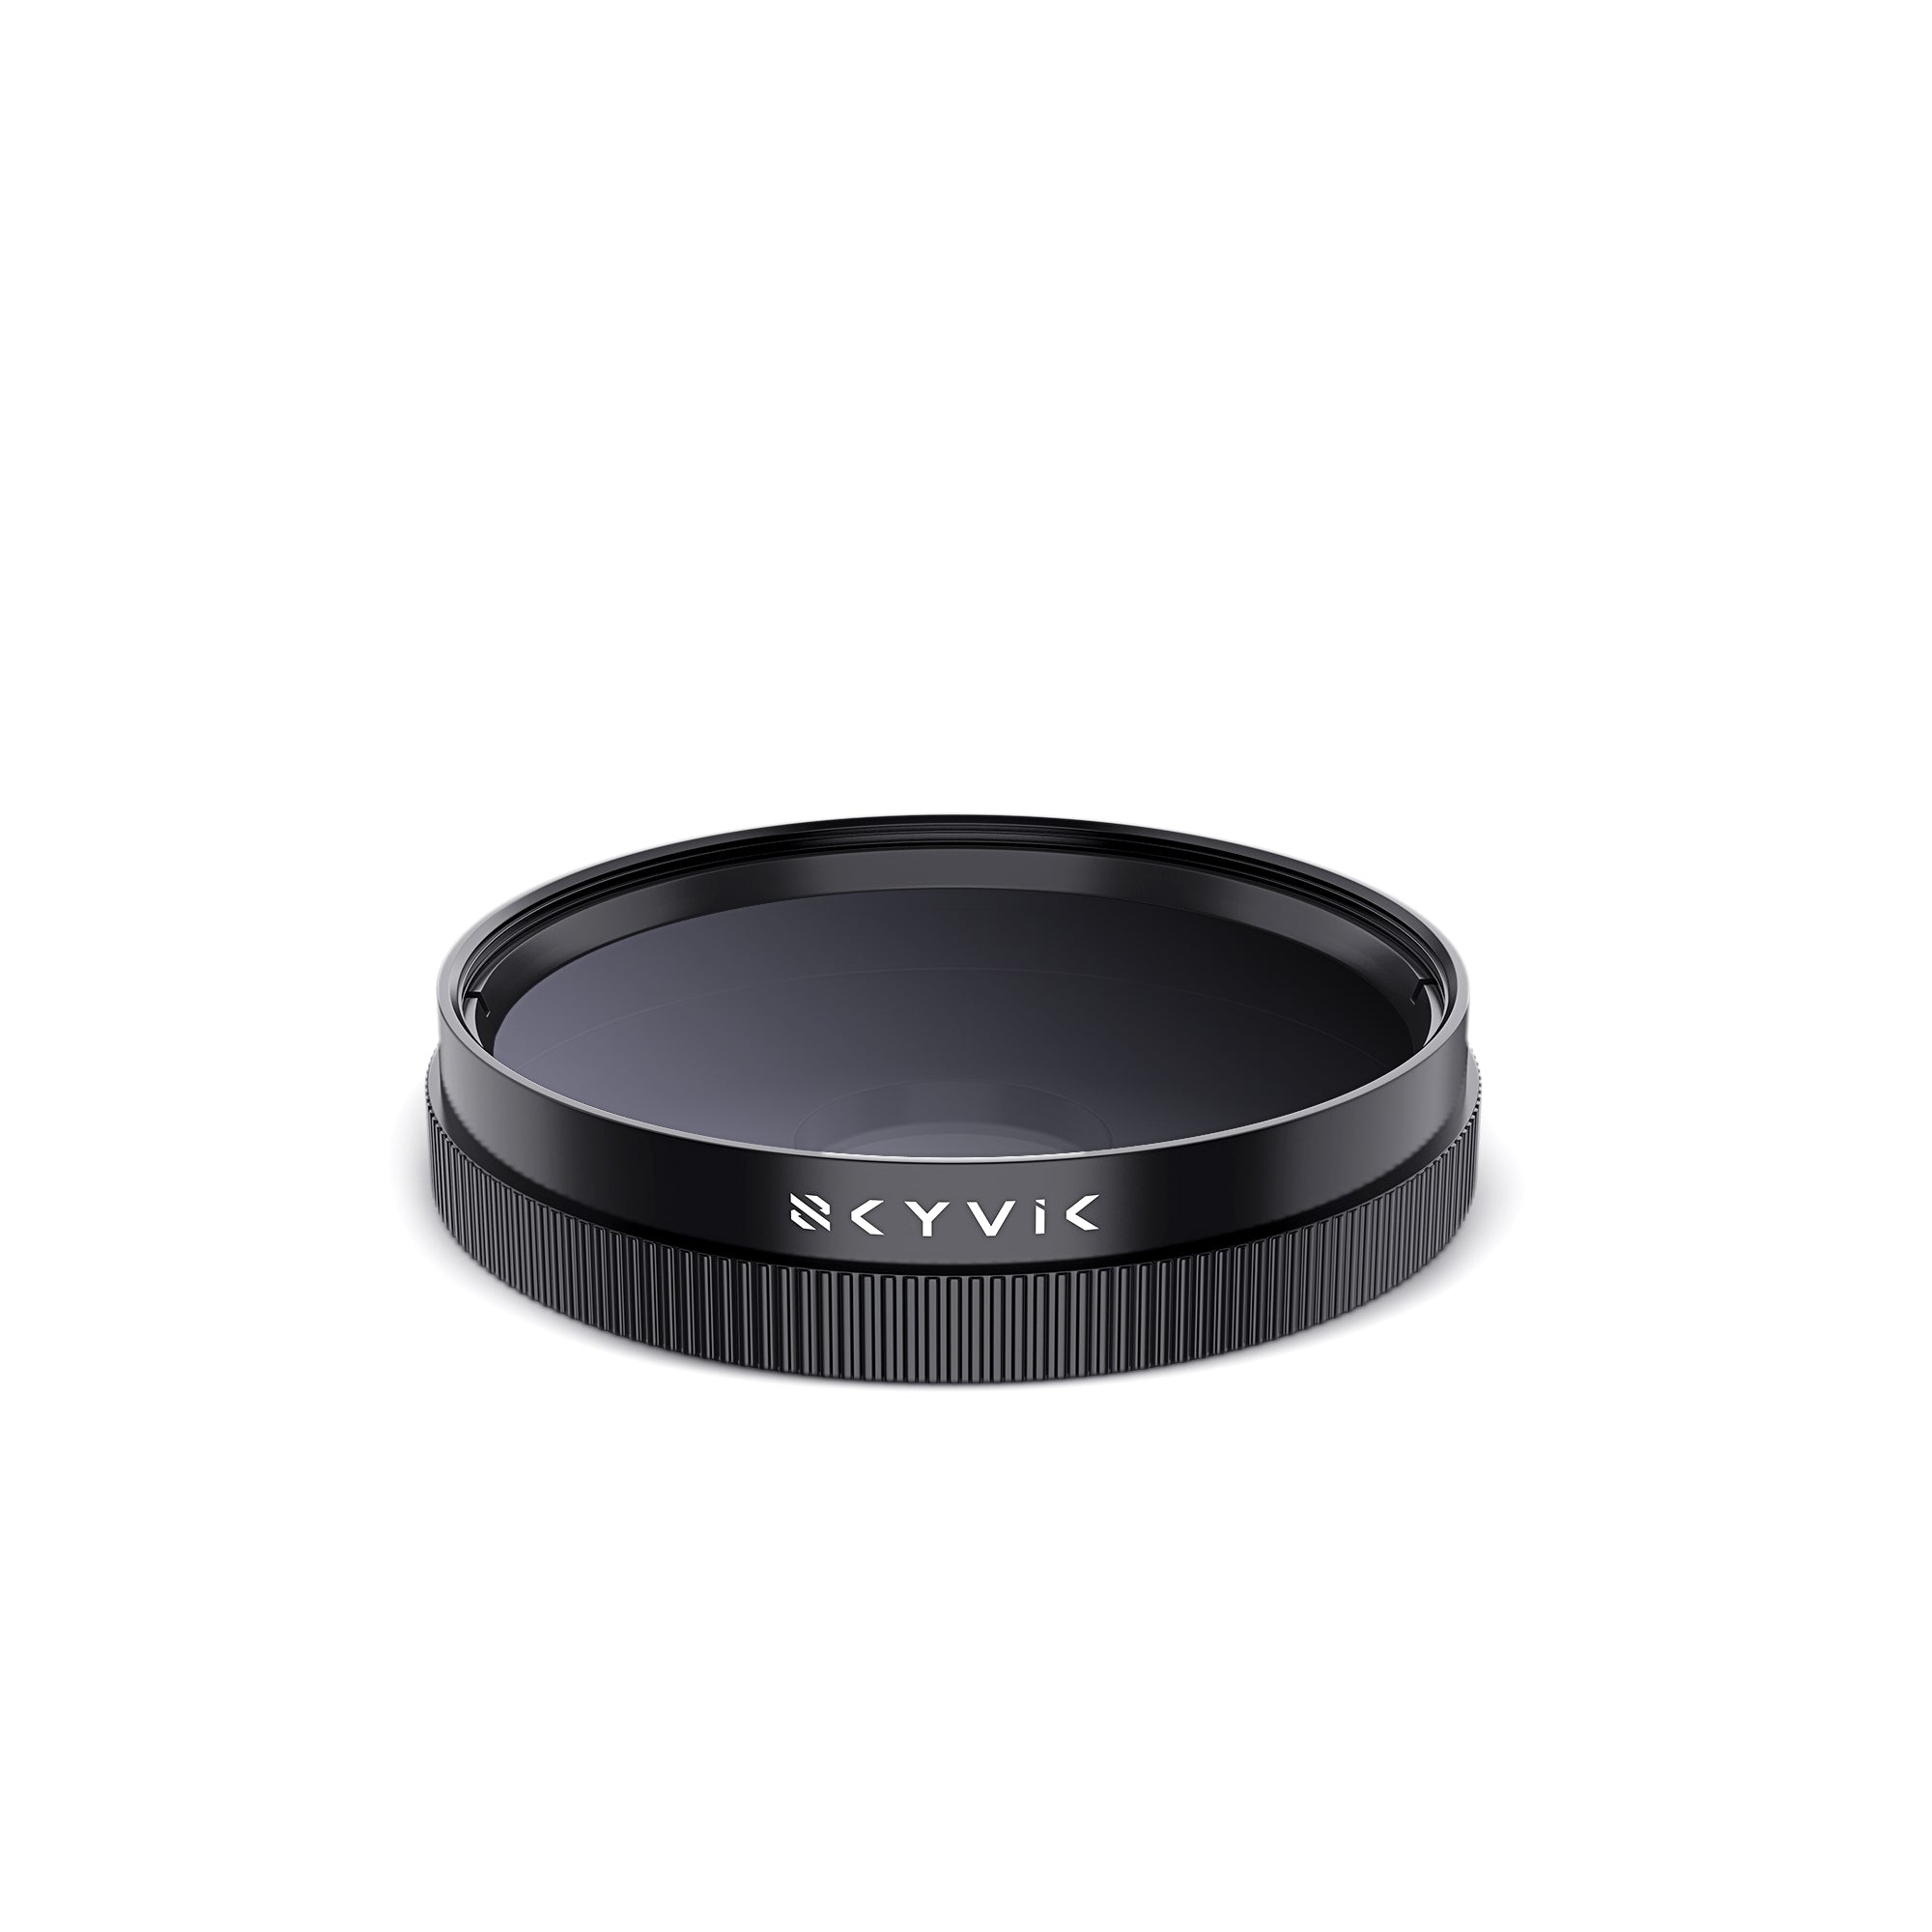 SKYVIK Signi One 37mm CPL Filter for Mobile Camera Lens